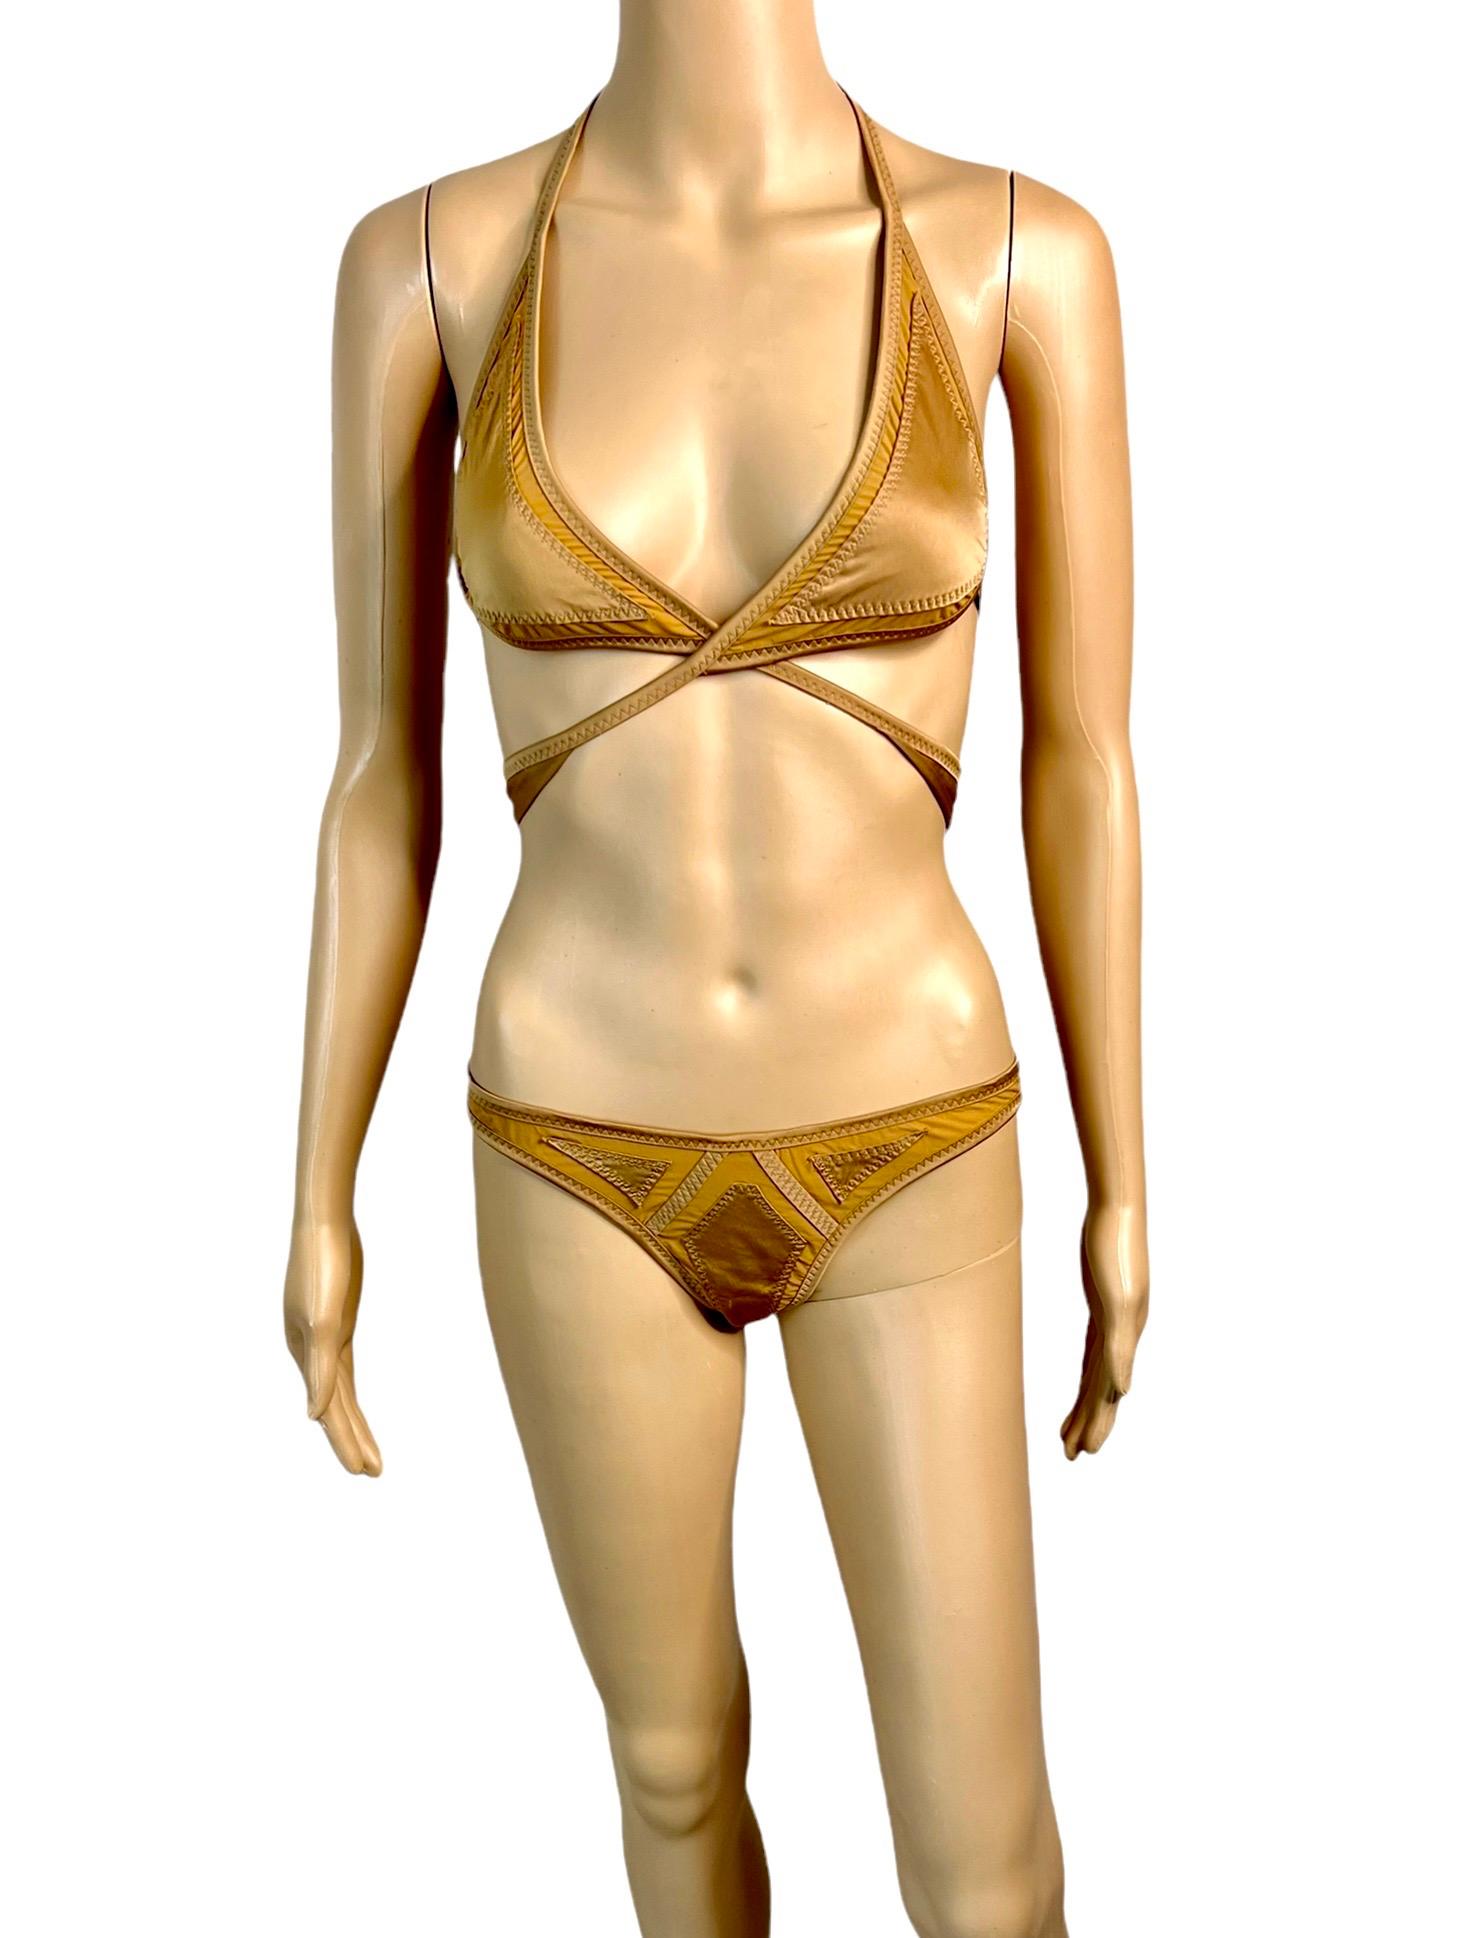 Gray Gucci S/S 2005 Runway Cutout Sheer Panels Two-Piece Bikini Swimsuit Swimwear For Sale